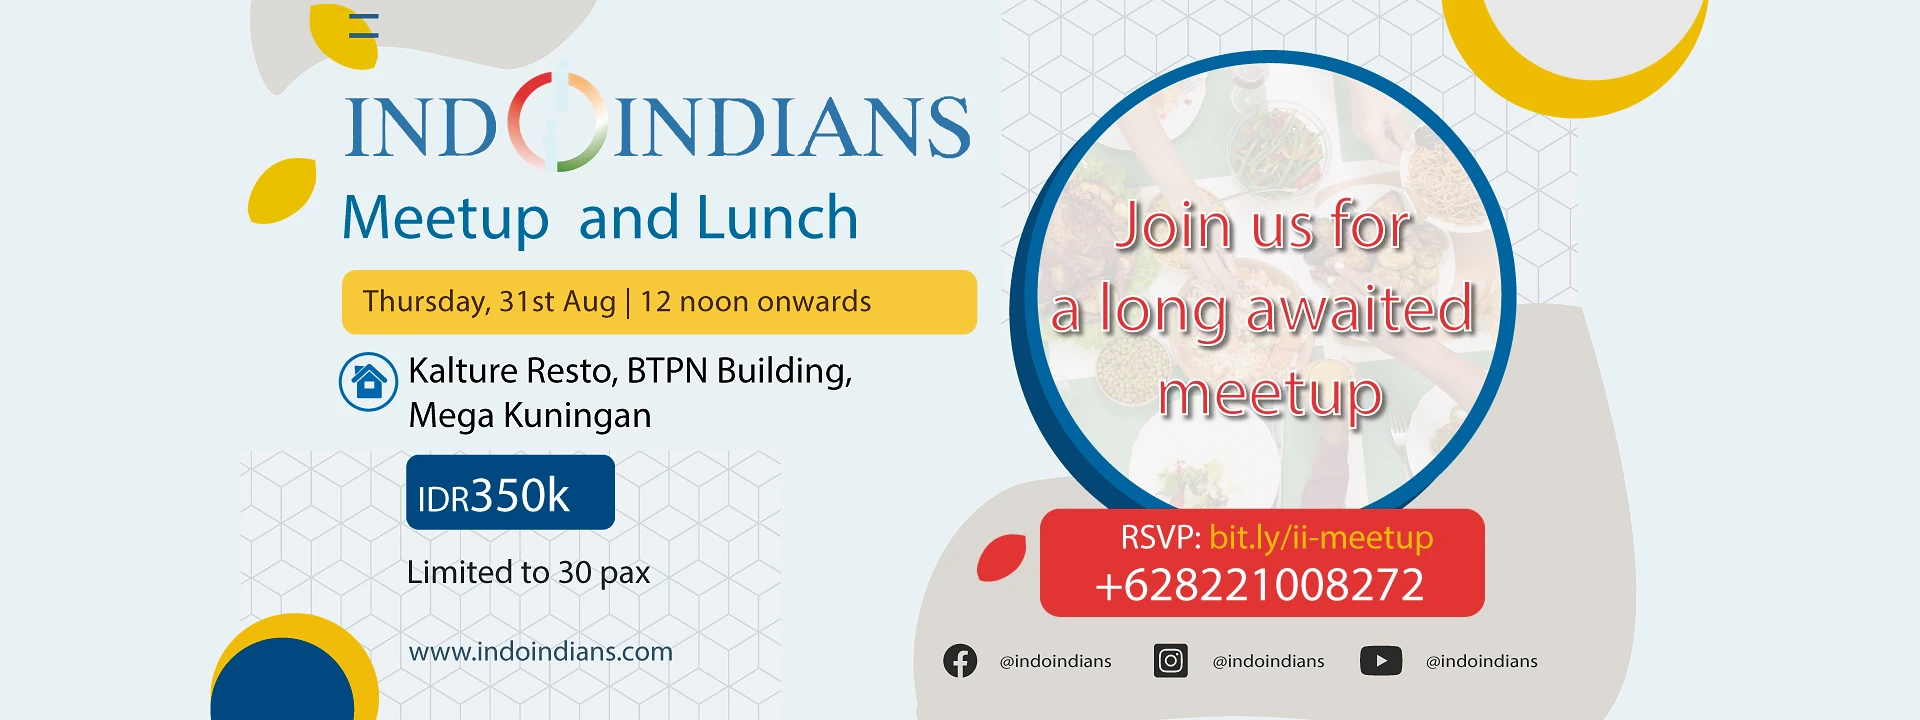 indoindians-meet-lunch